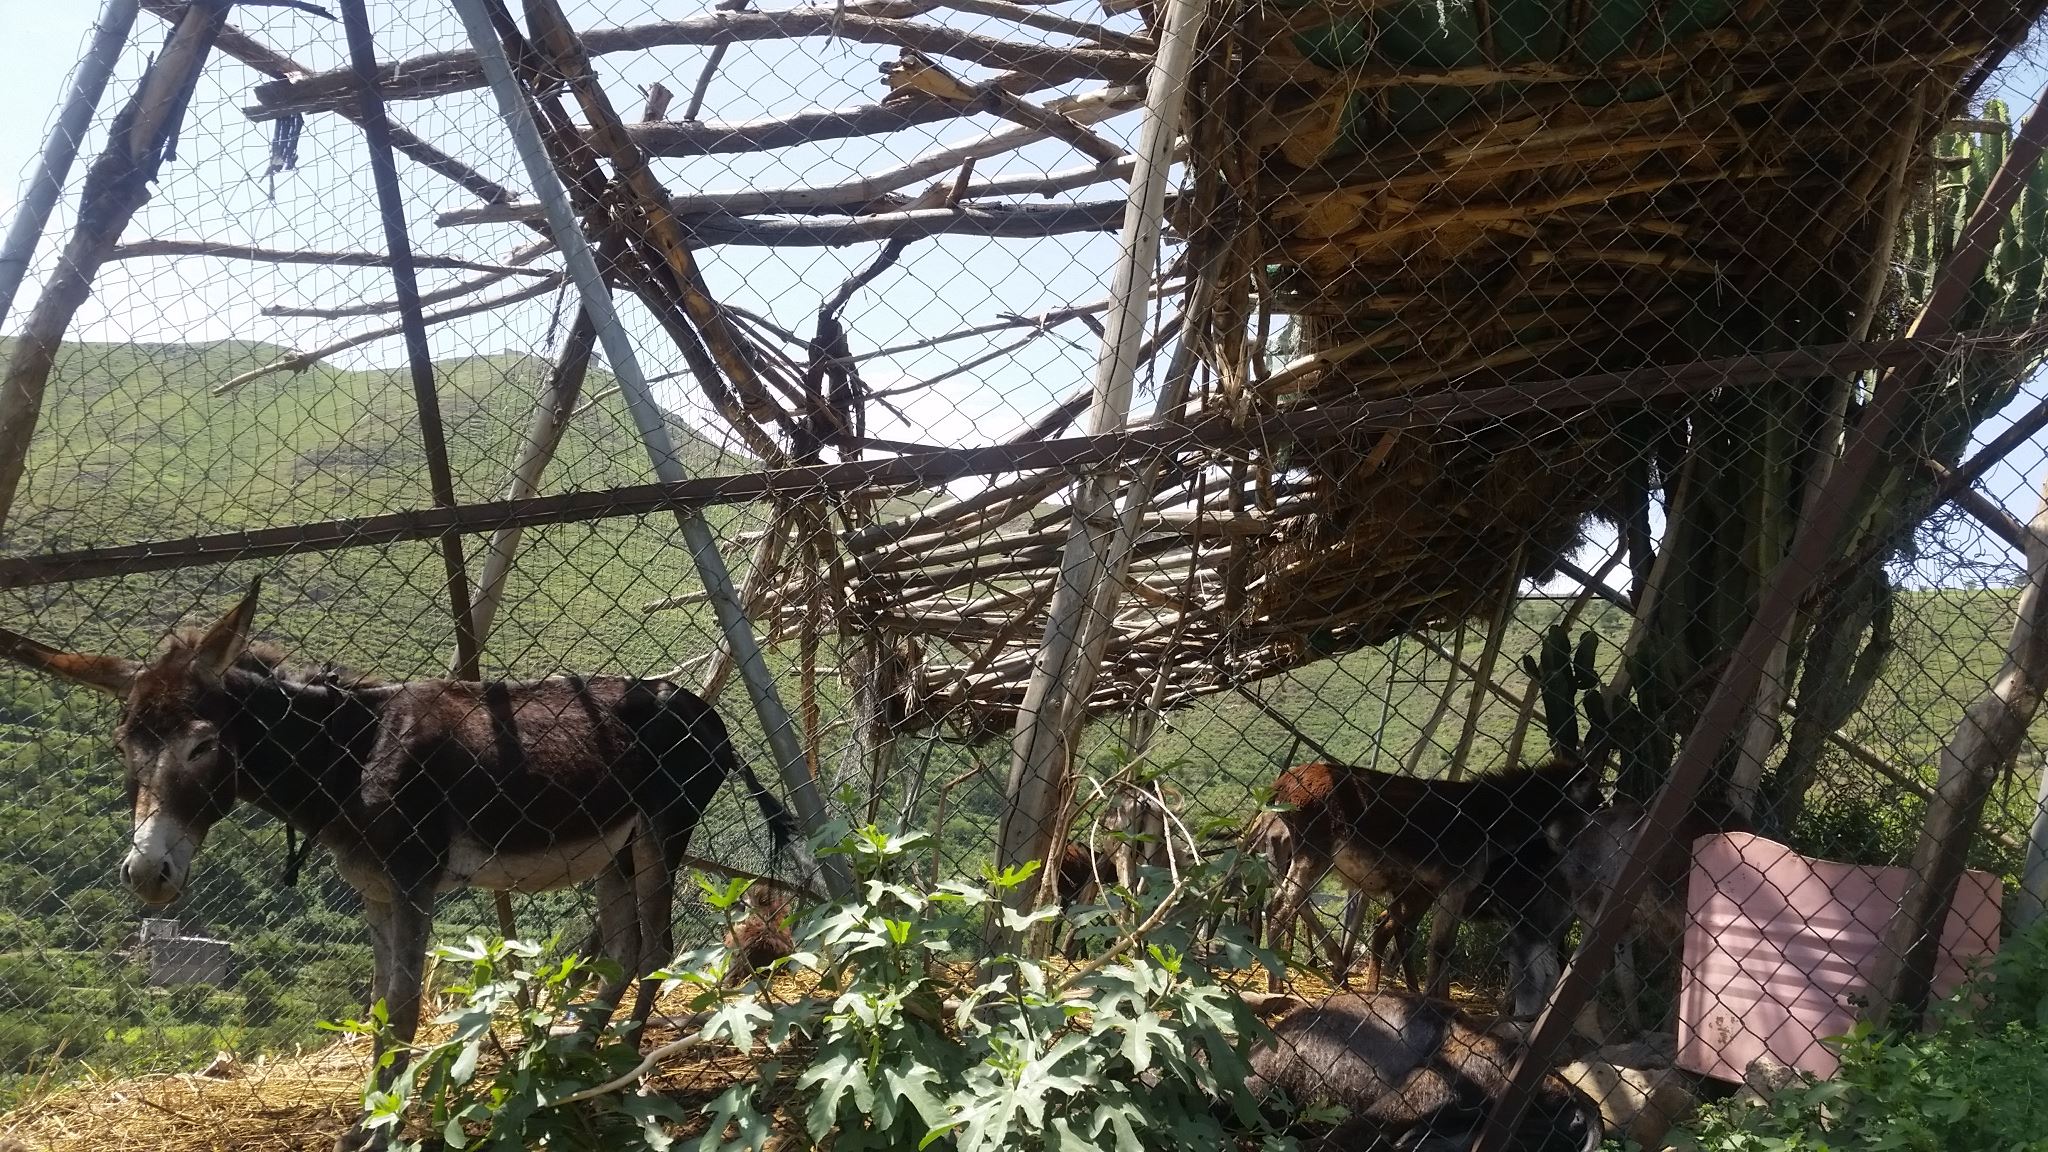 Ibb Zoo baboon wildcat enclosure project.jpg